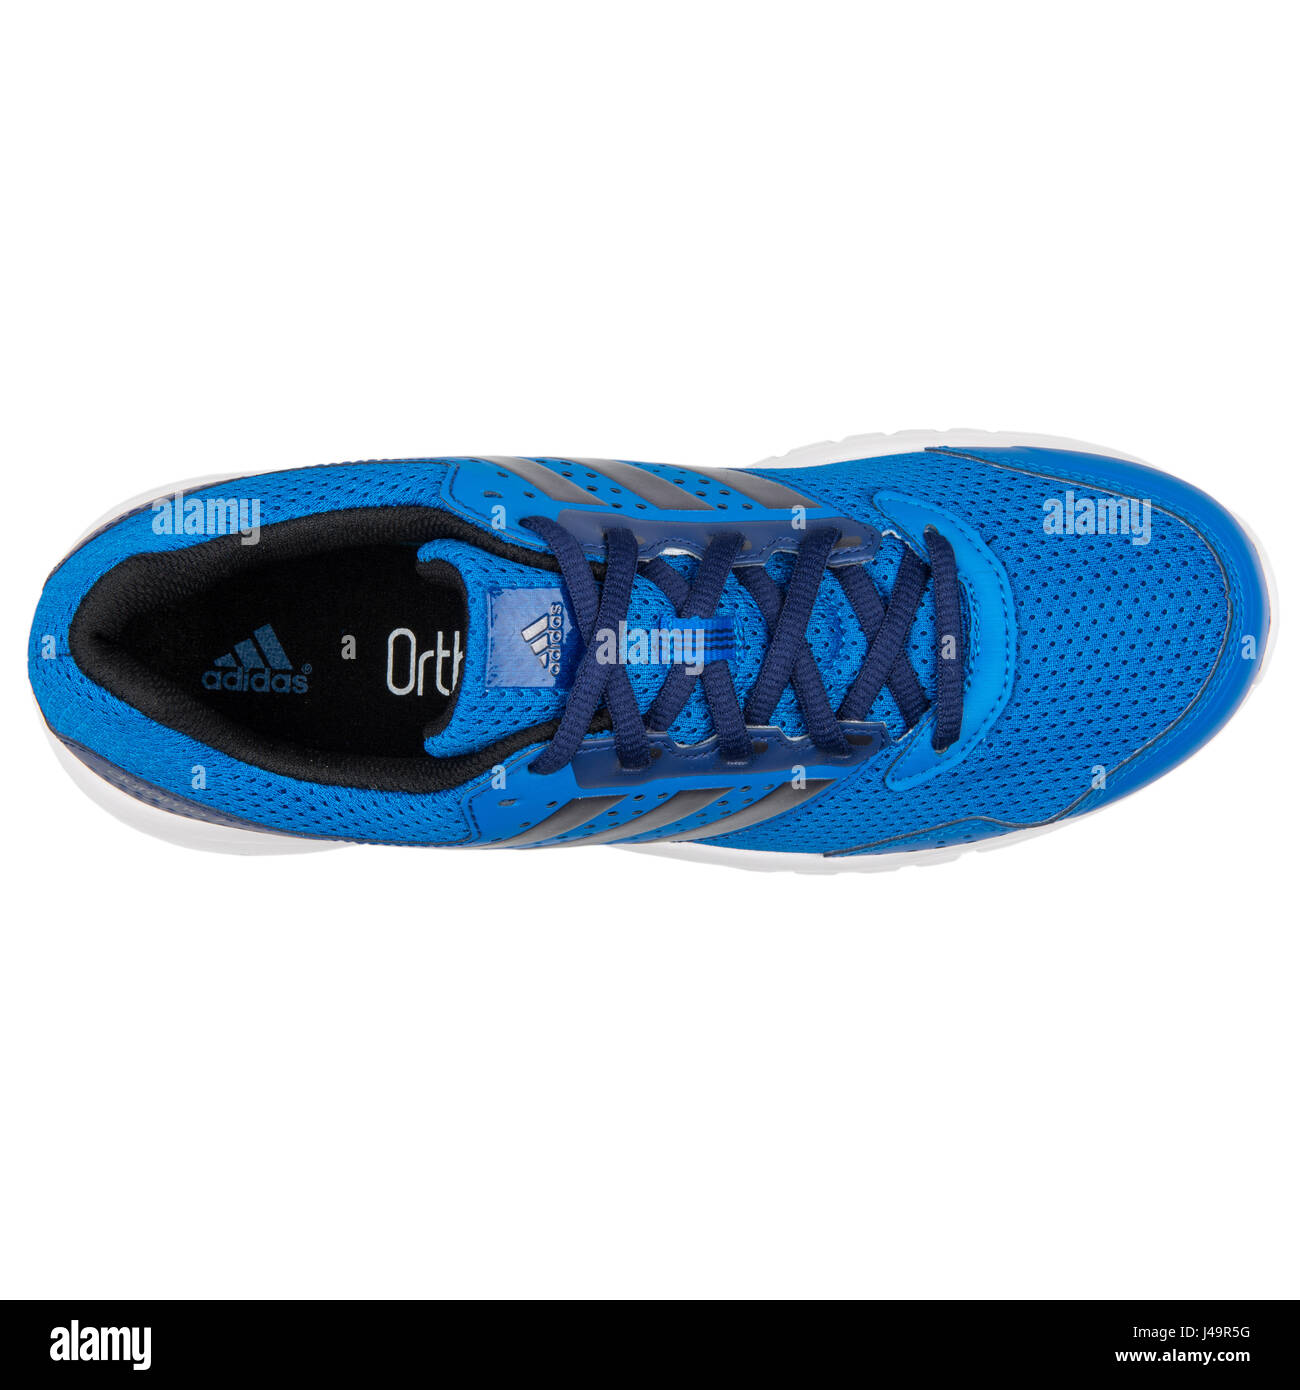 Adidas Duramo 7 k Blue - S83314 Stock Photo - Alamy